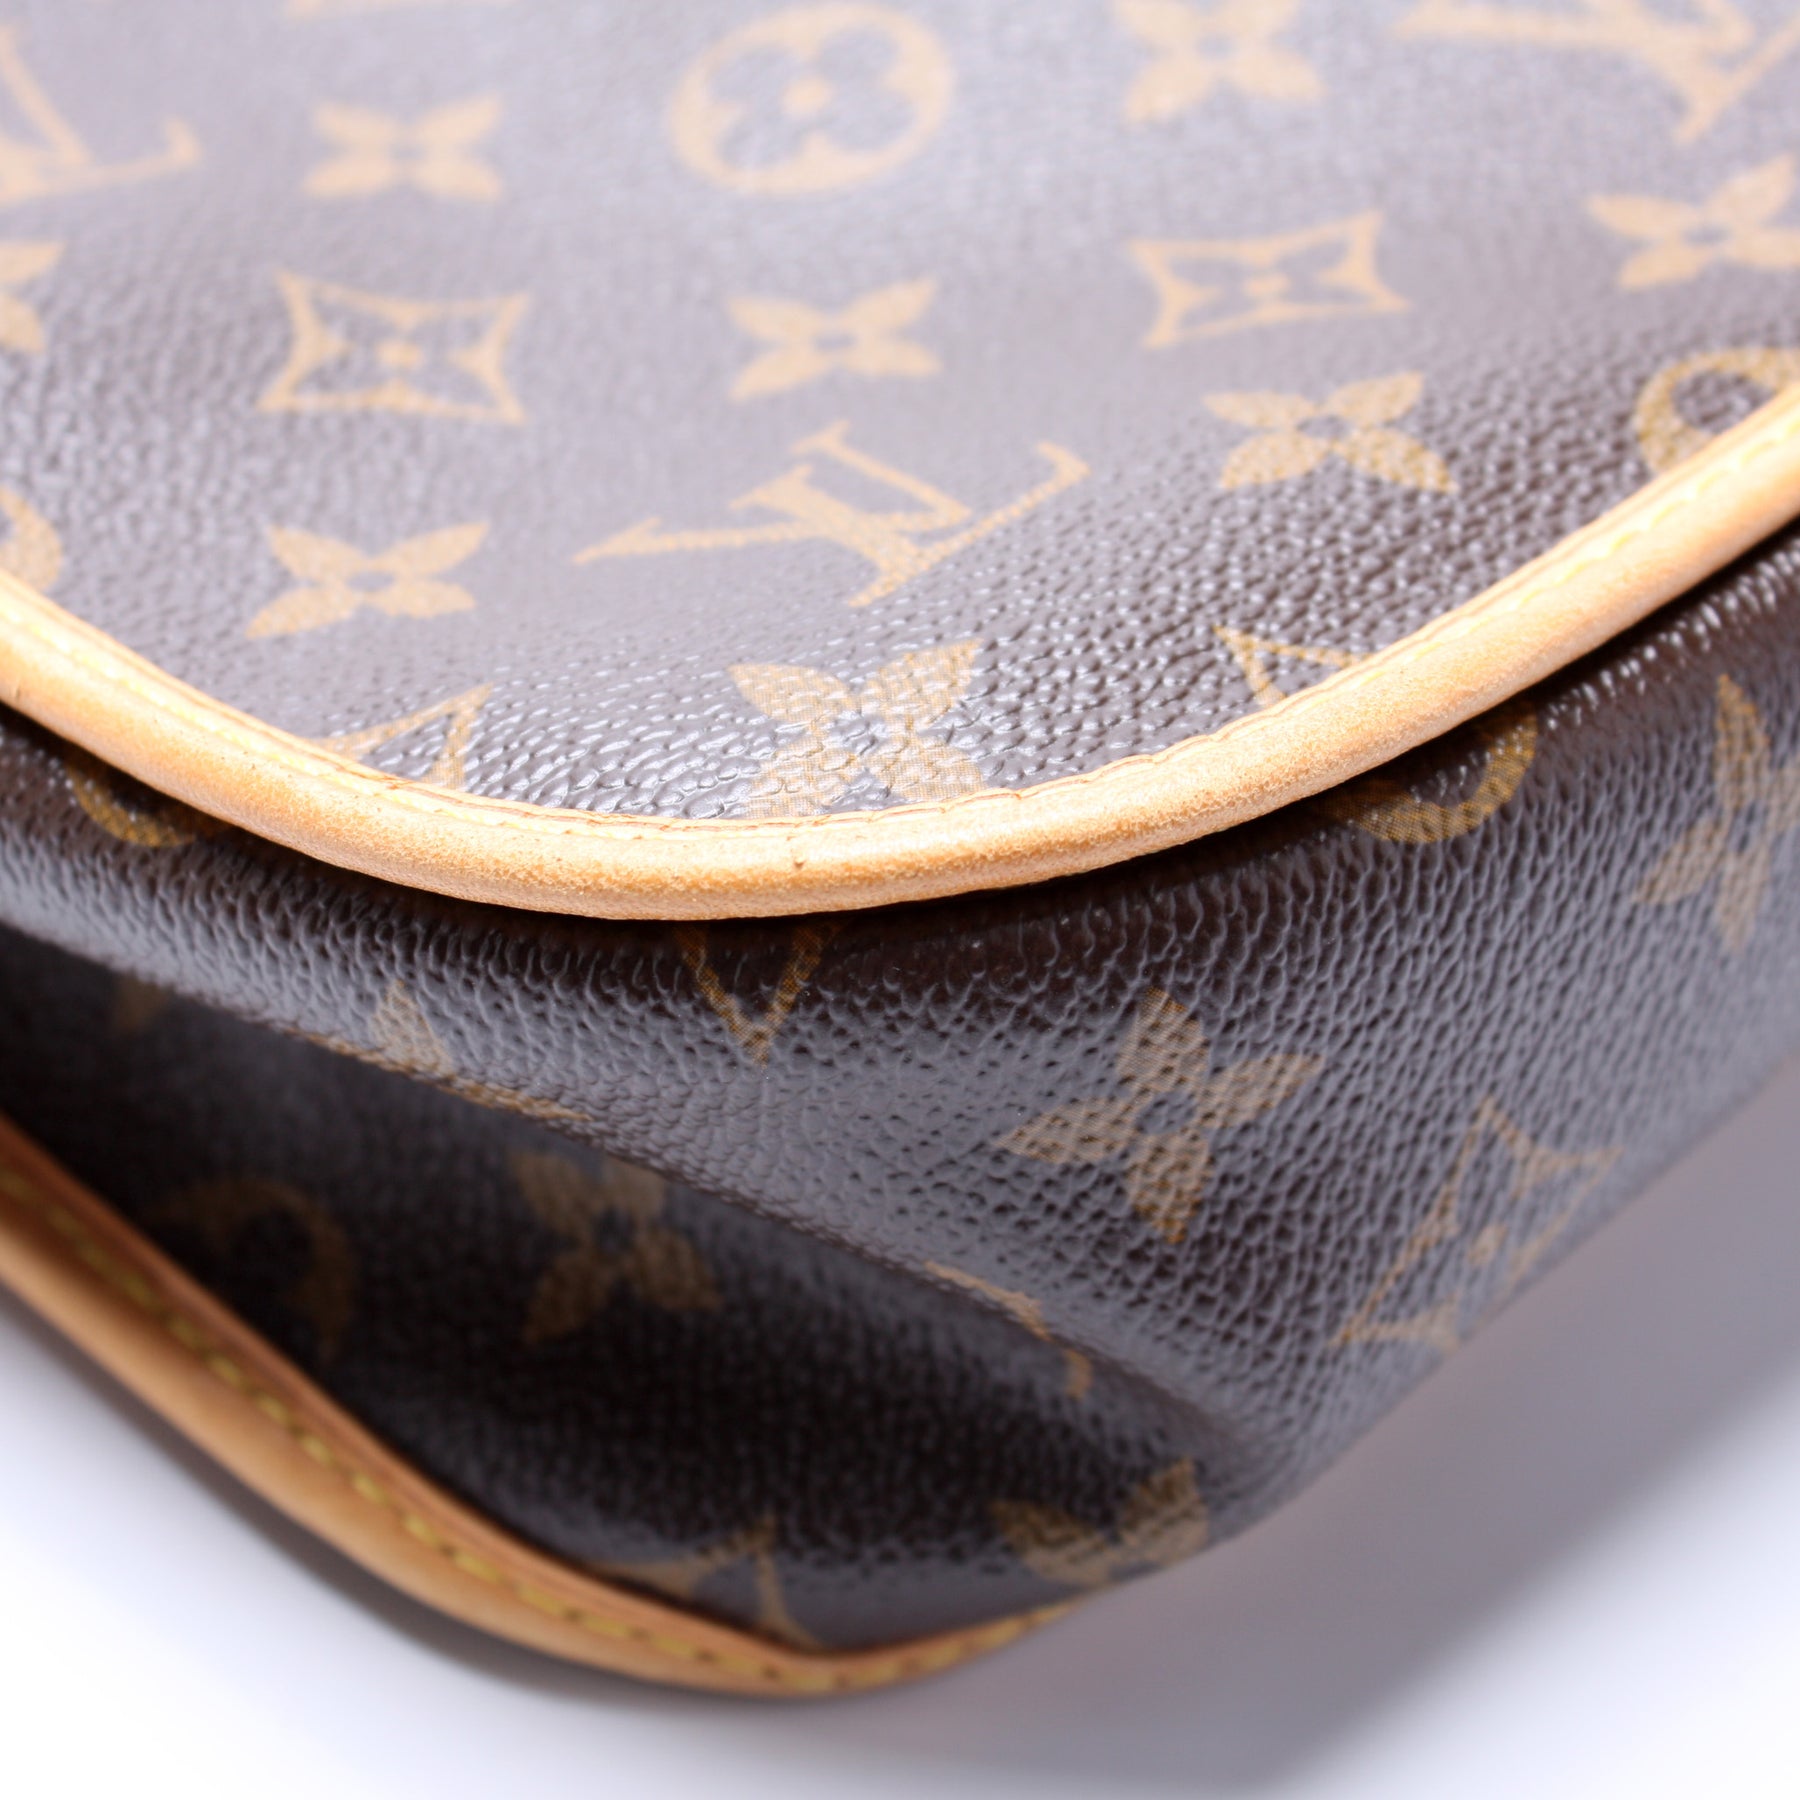 Bosphore Messenger PM Monogram – Keeks Designer Handbags